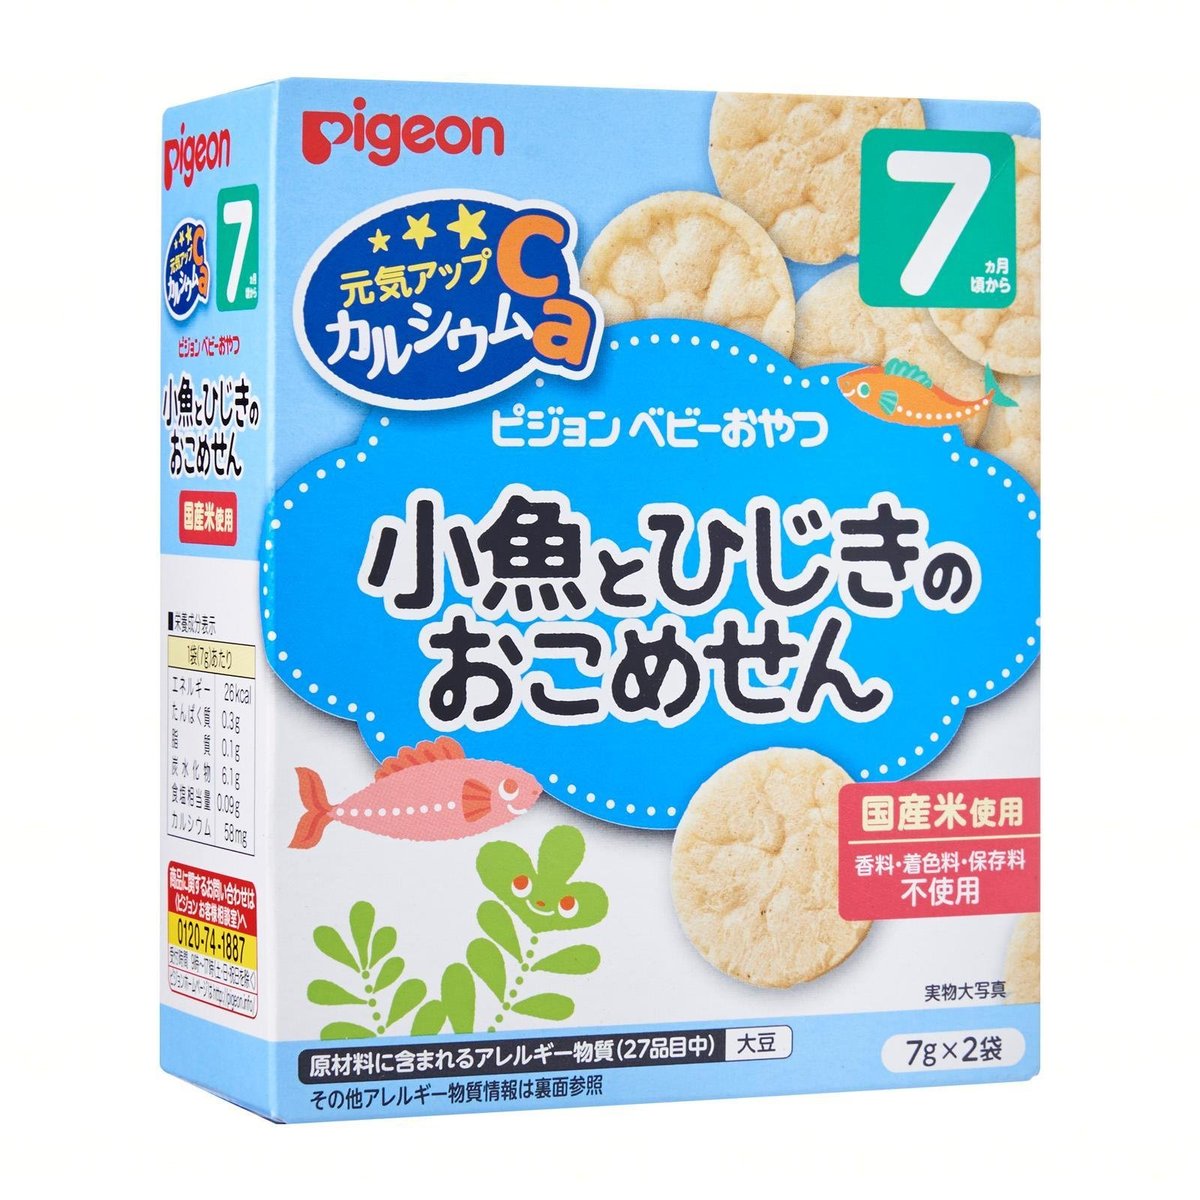 Pigeon 高鈣海藻魚米餅-7g×2袋